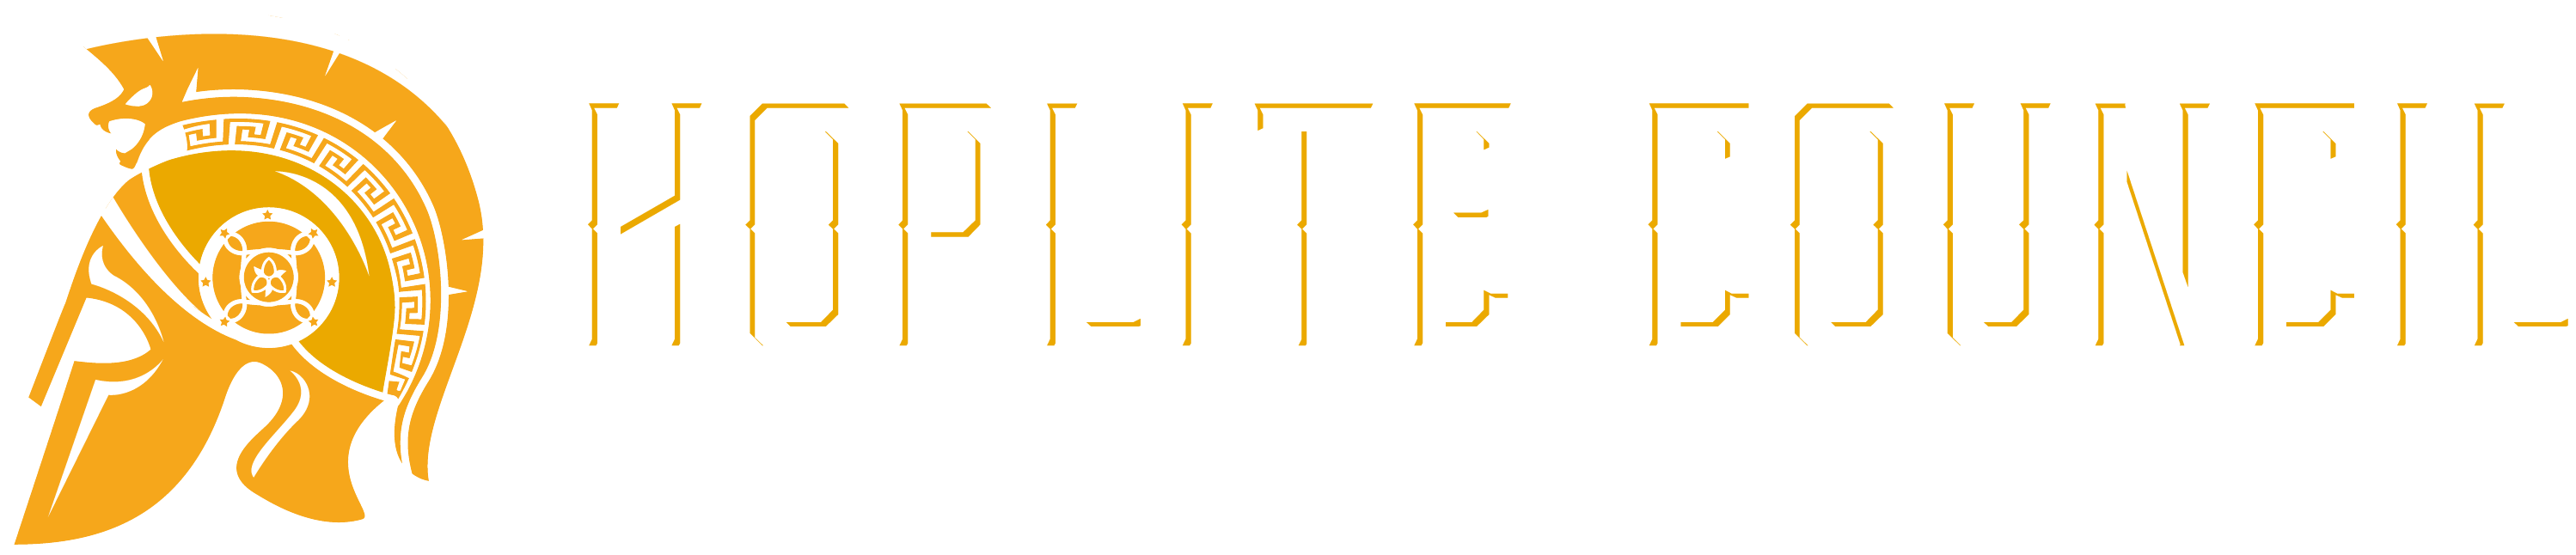 Hoplite Council Logo